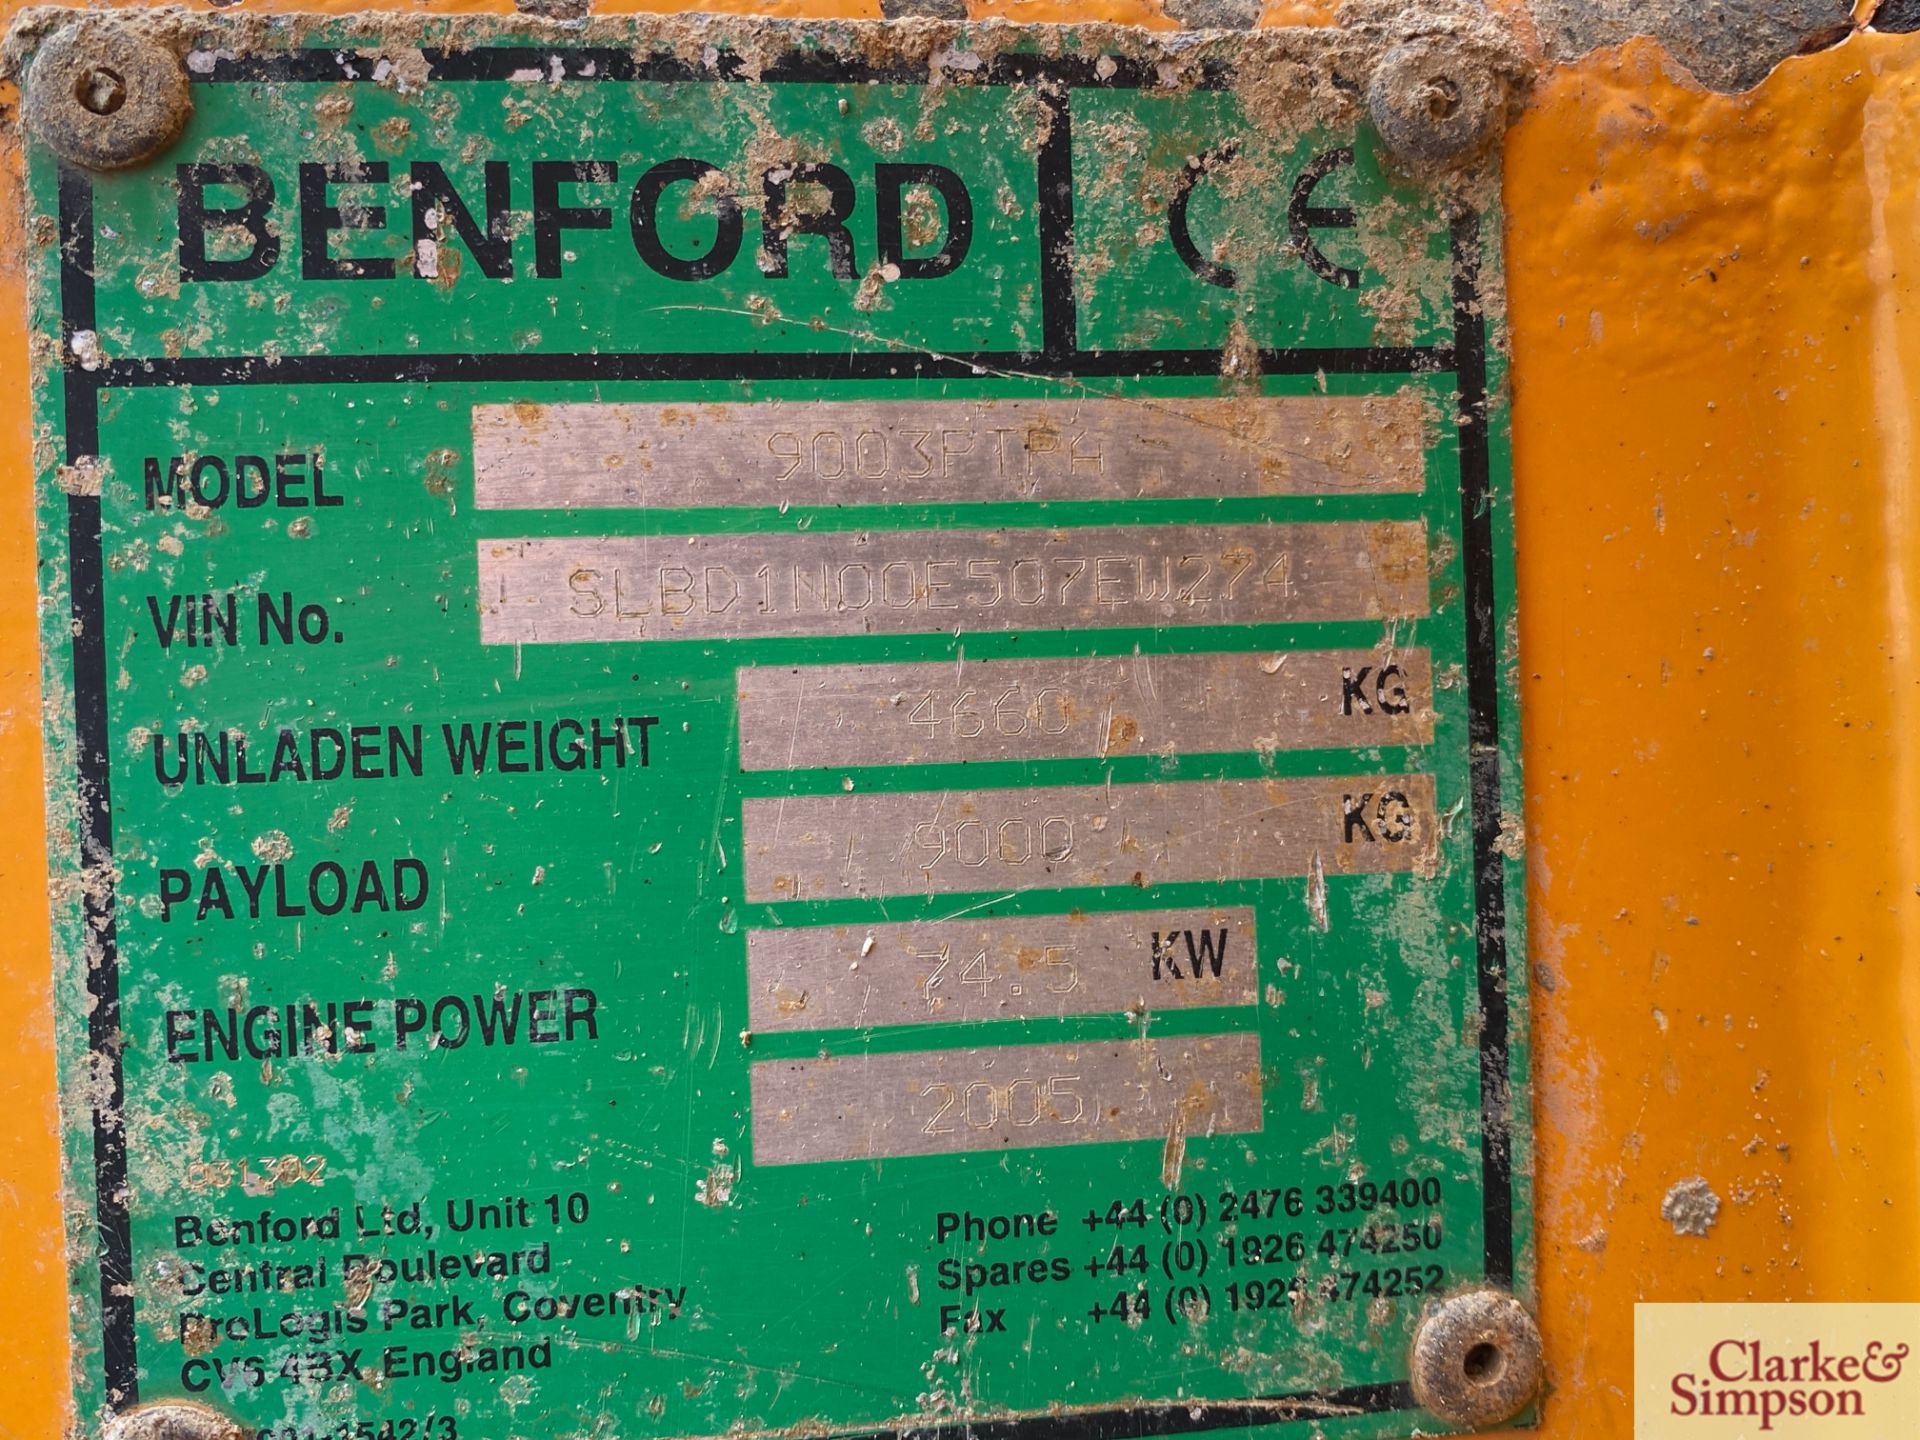 Benford 9T 4WD pivot steer dumper. 2005. Serial number SLBDINOOE507EW274. 500/60R22.5 wheels and - Image 38 of 38